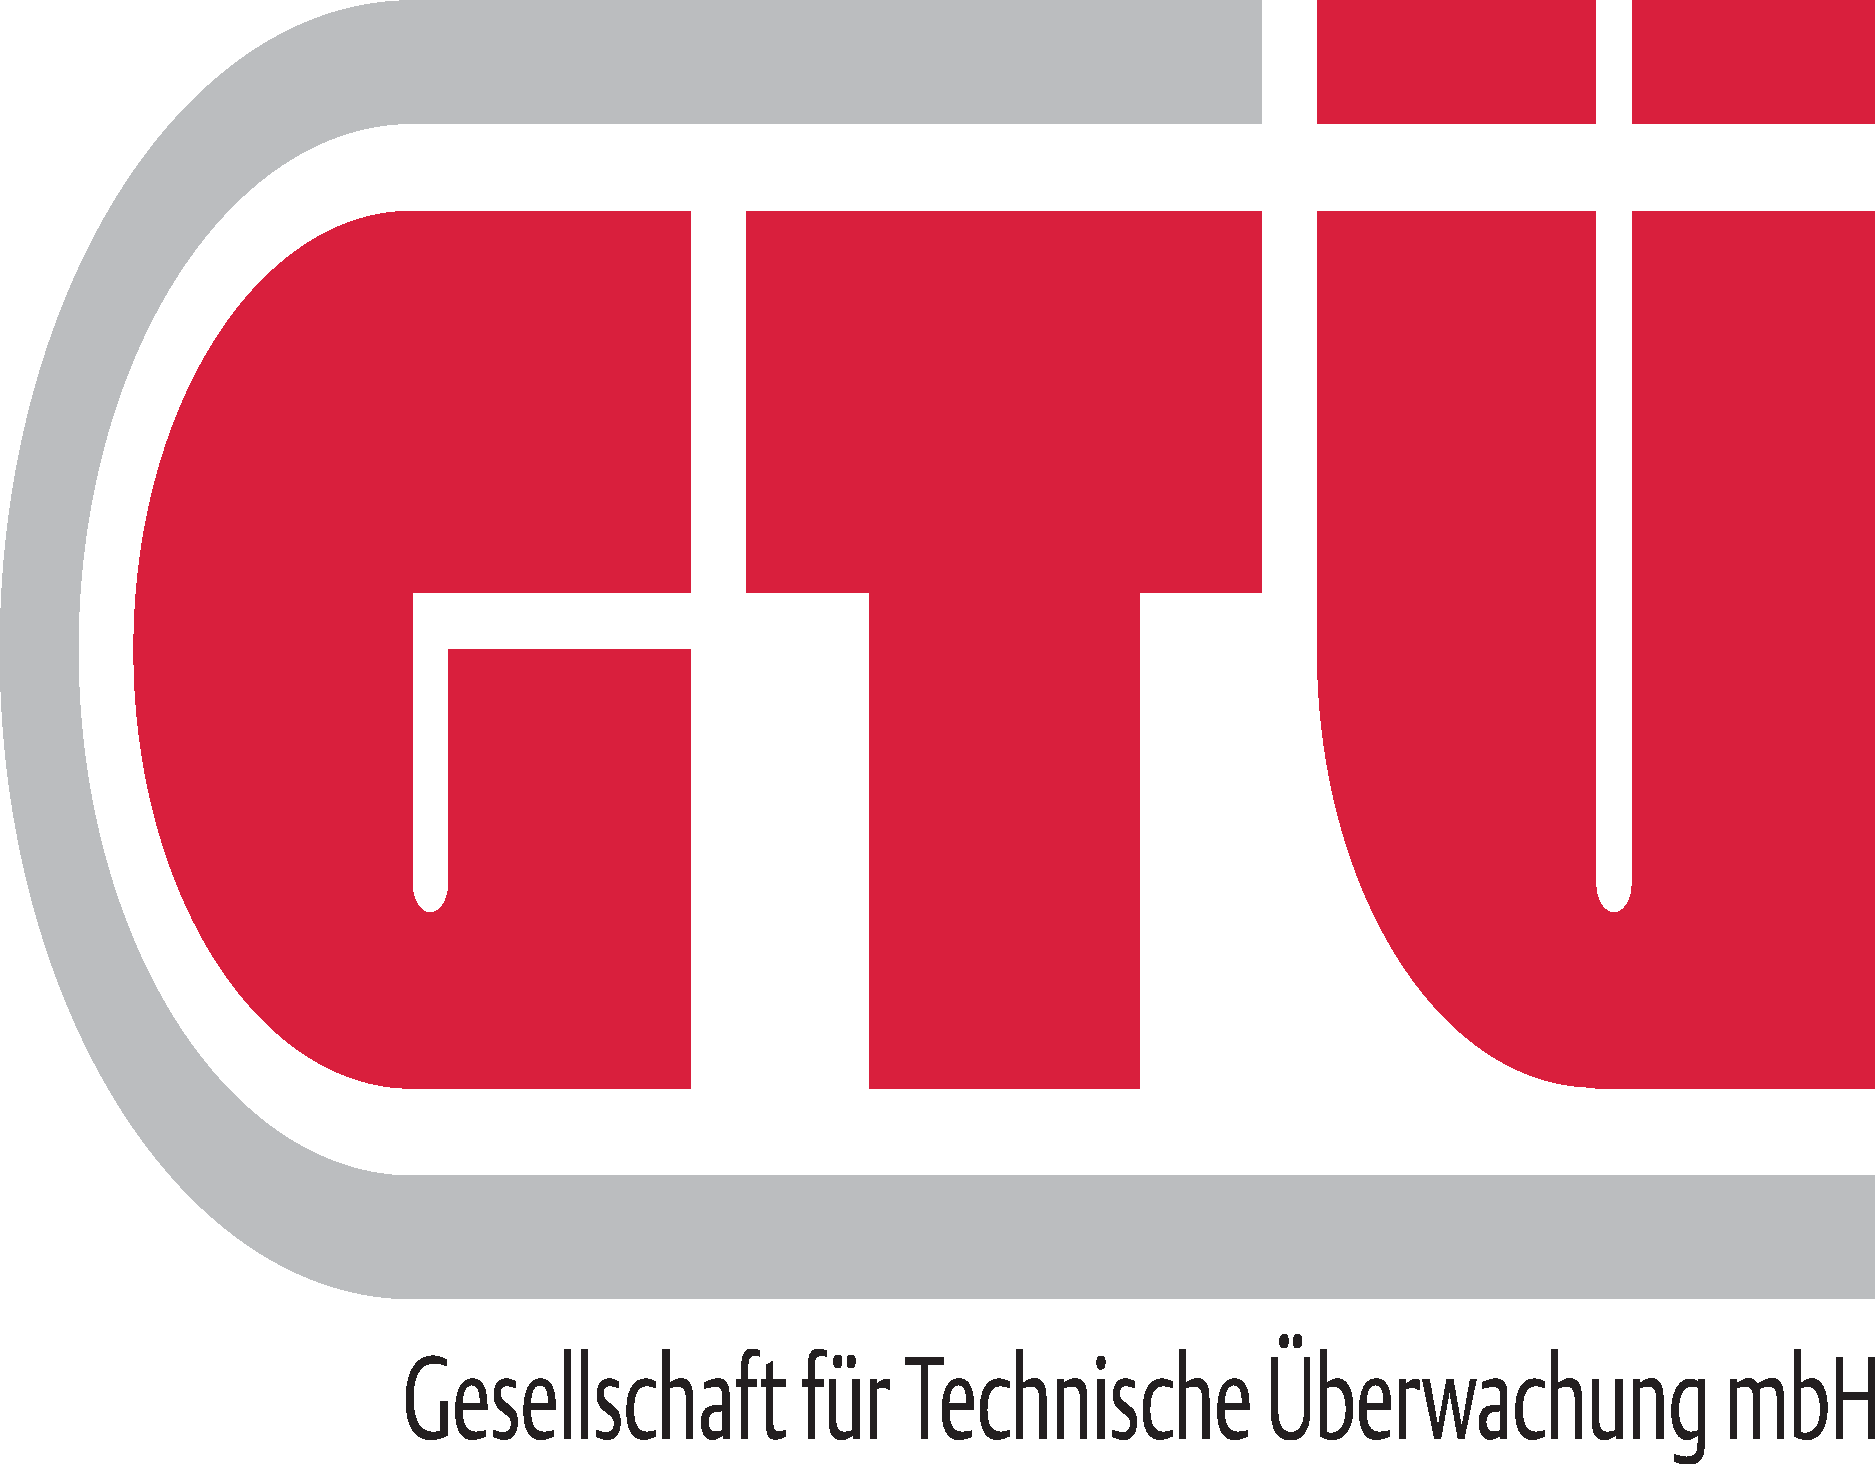 GTU Logo for Car Enthusiasts